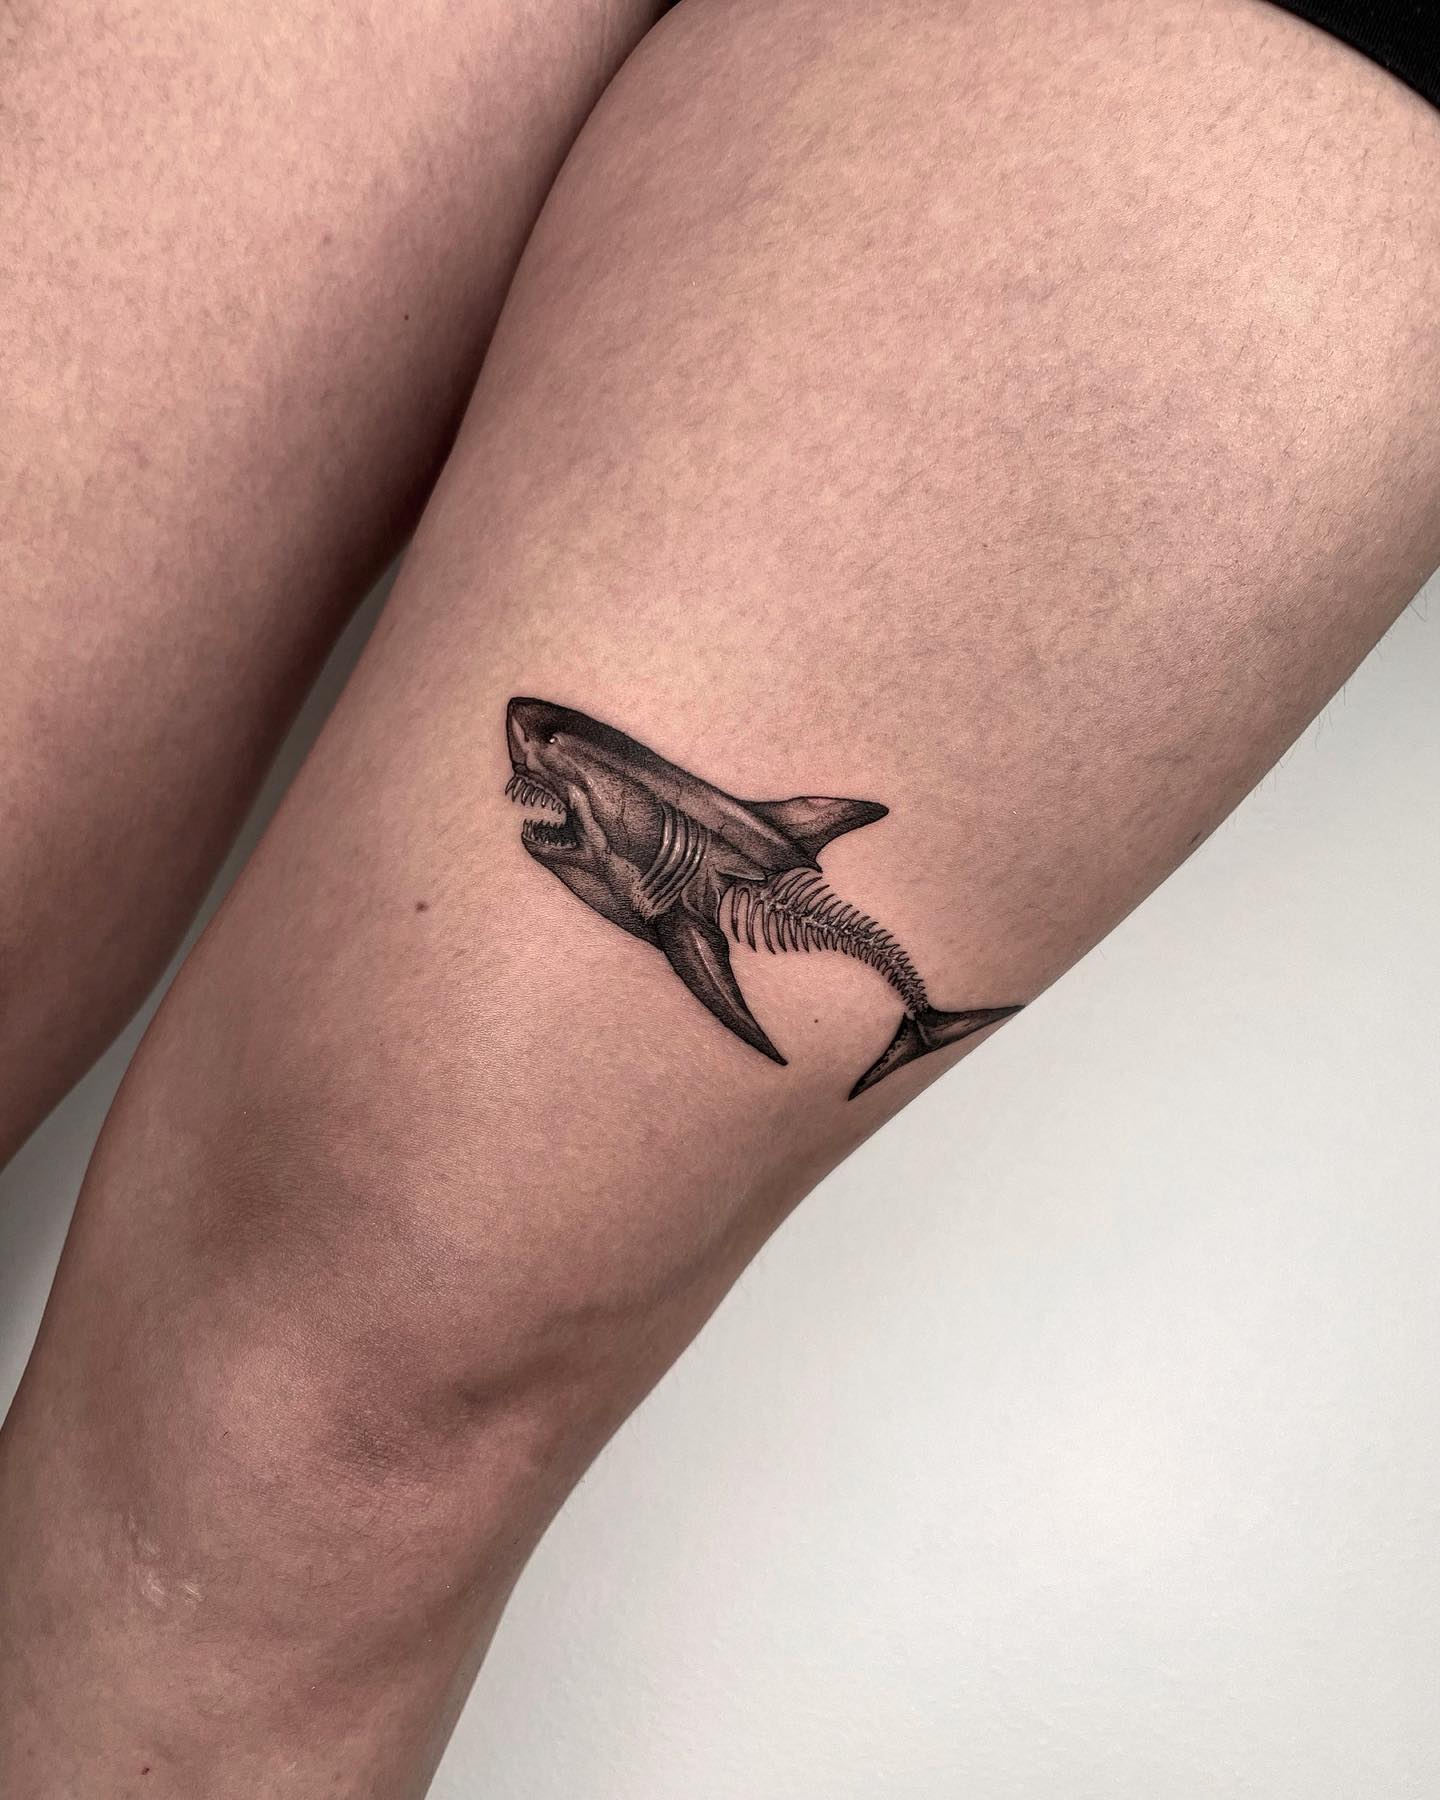 Microrealistic shark tattoo located on the inner arm